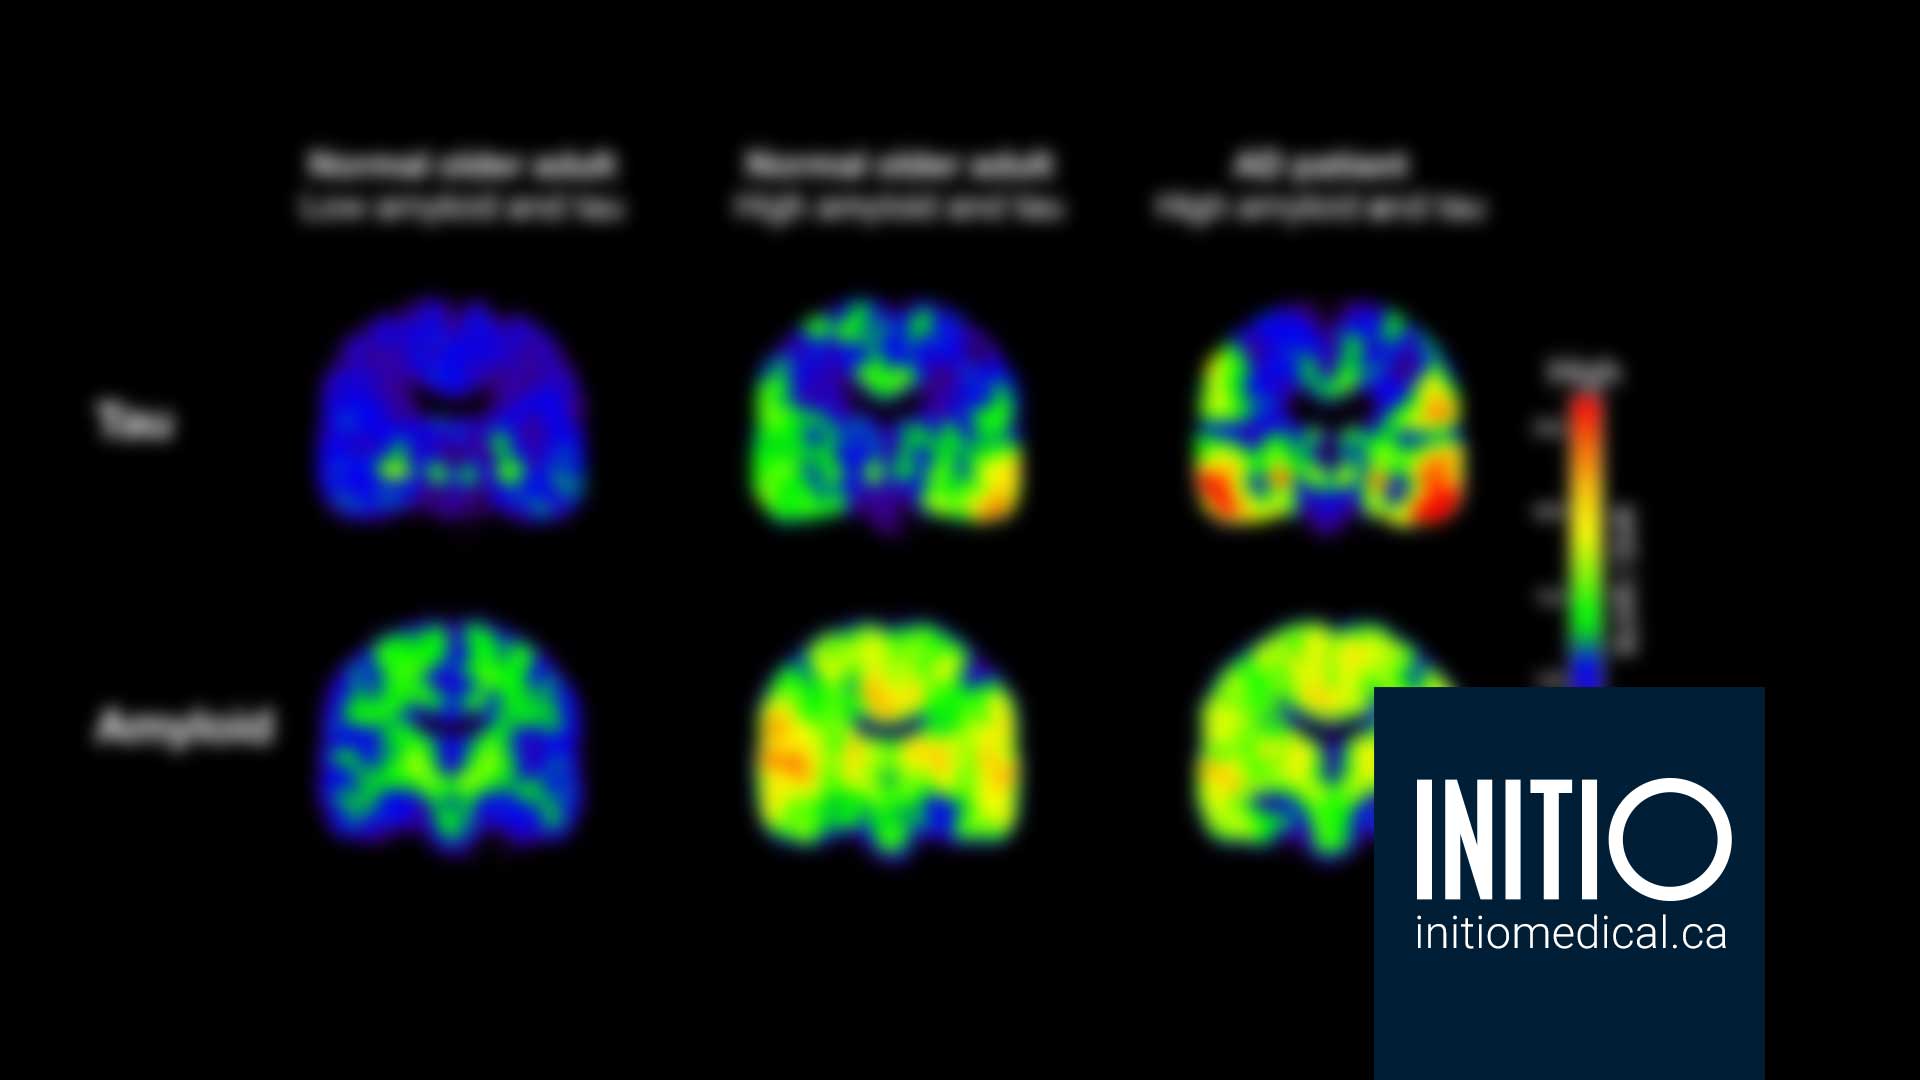 PET tracer may improve understanding of Alzheimer’s Disease